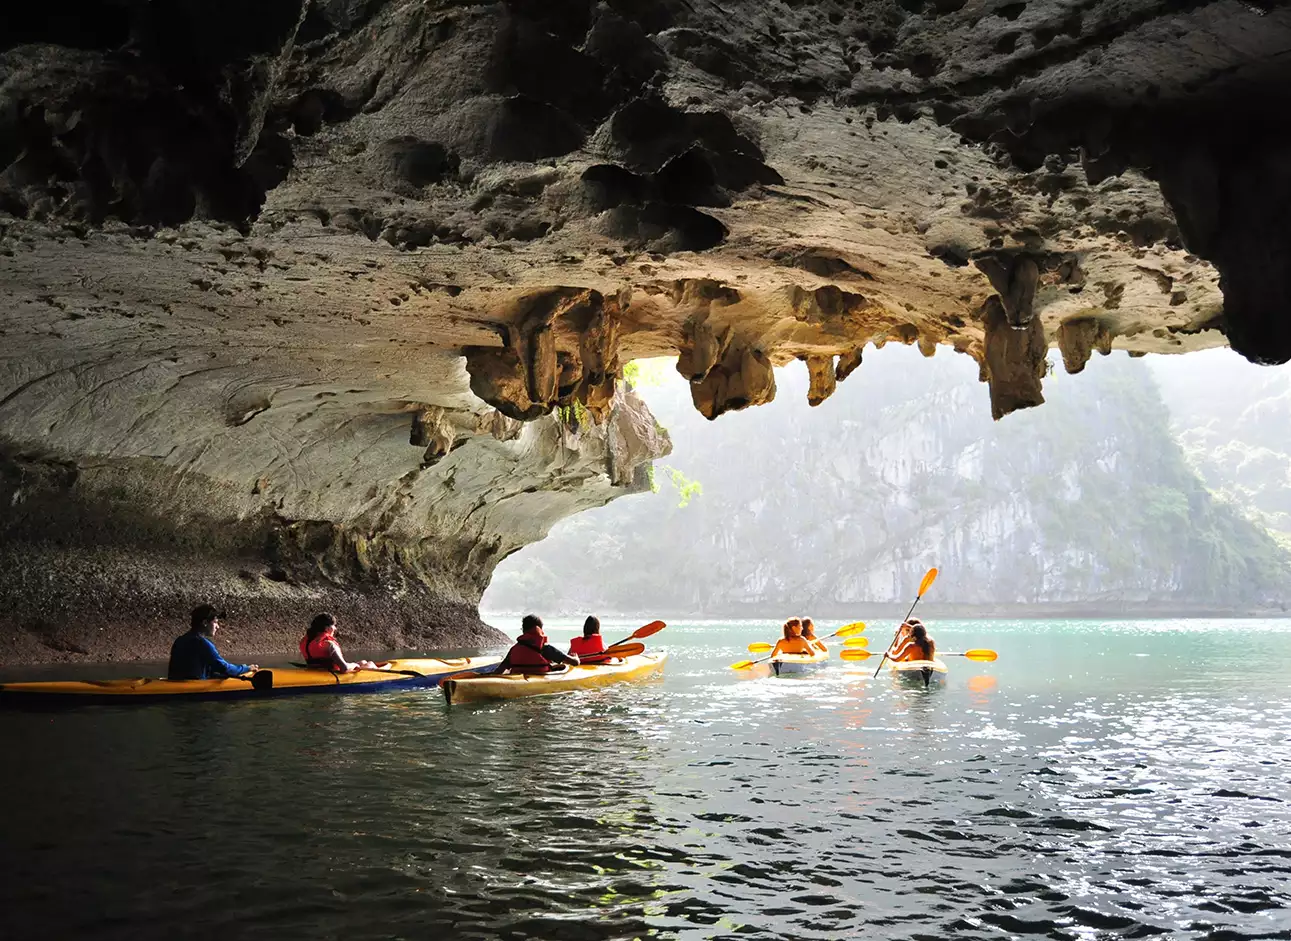 Kayaking and Canoeing - Enjoy paddling adventures on serene waters